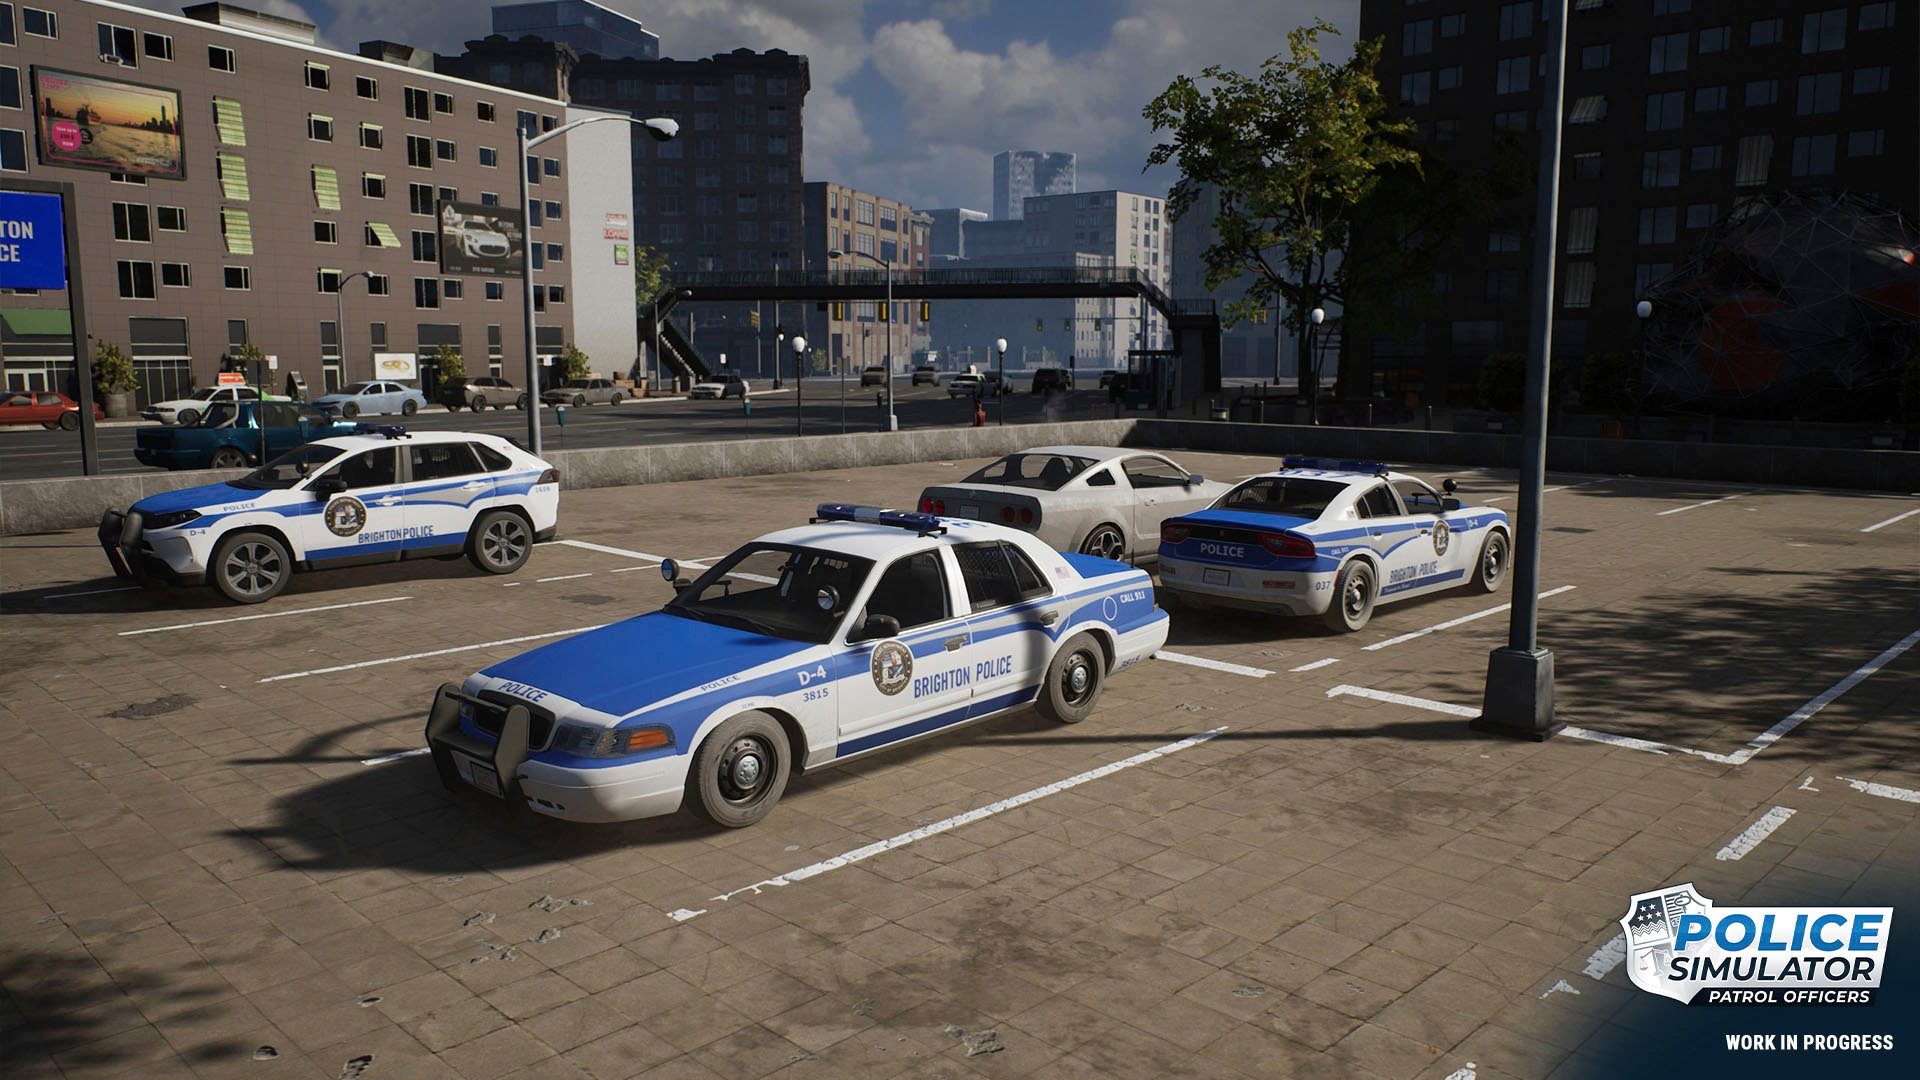 Police Astragon Patrol 4 PlayStation Simulator: Officers